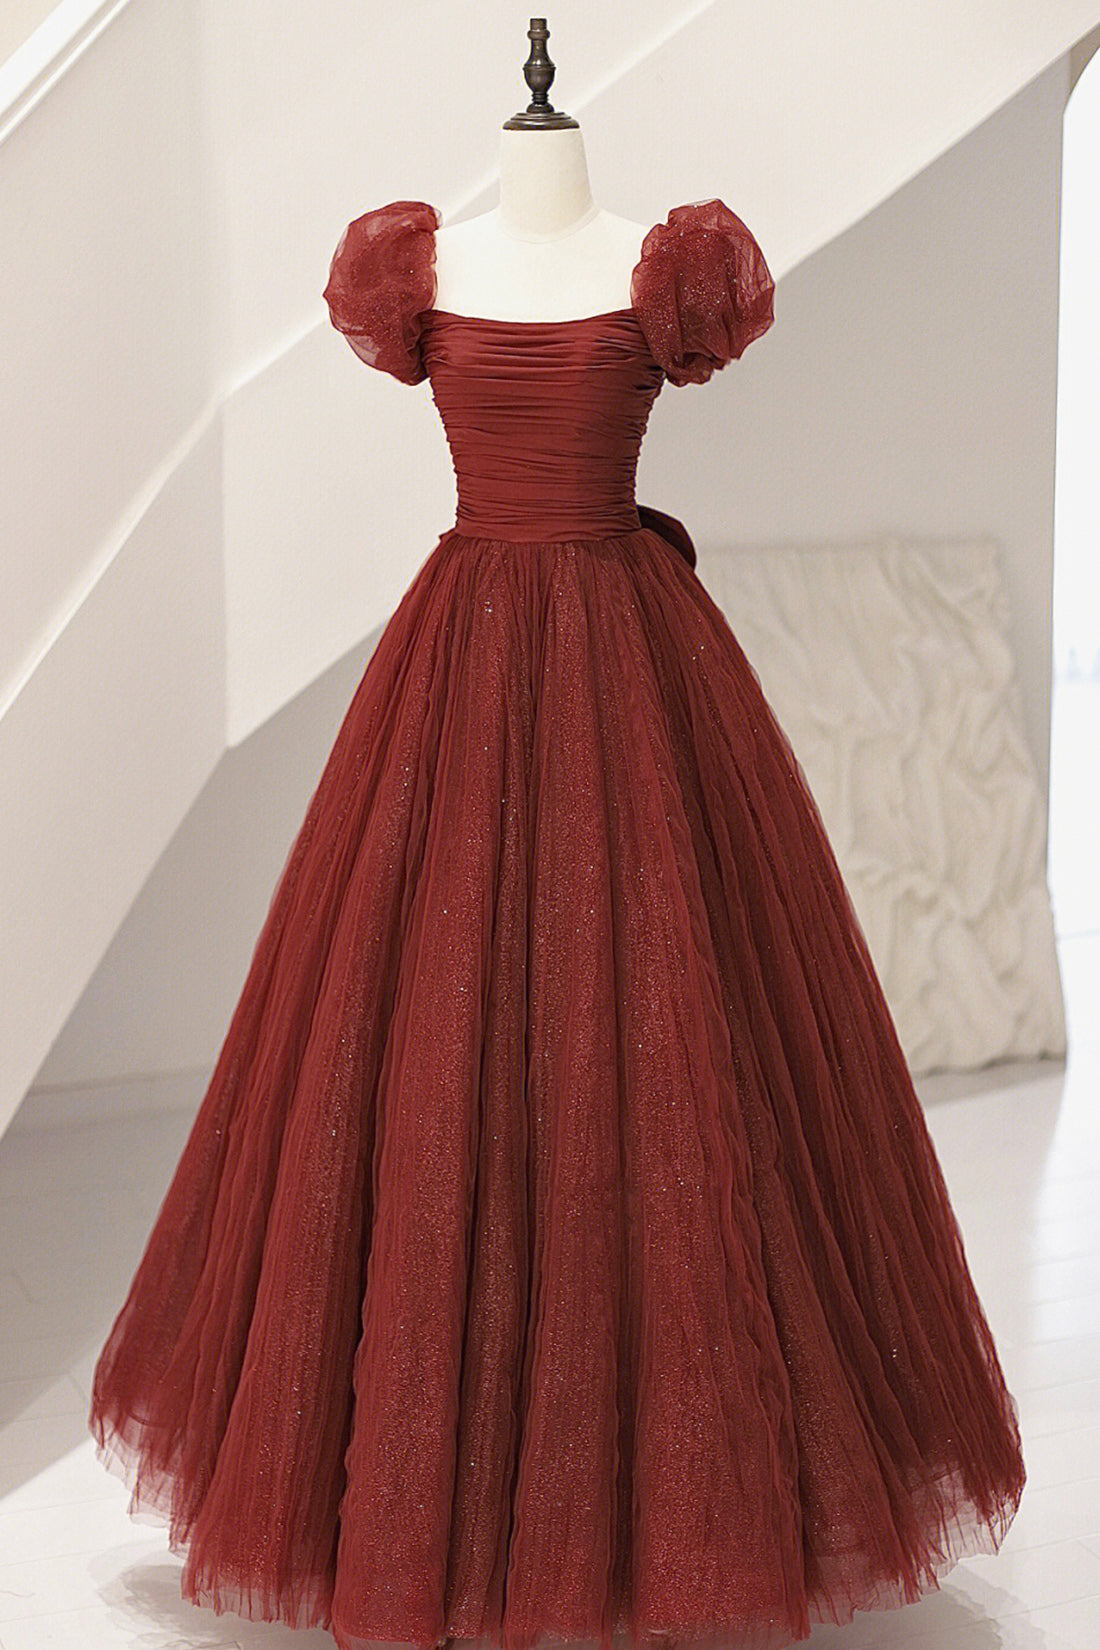 Burgundy Tulle Long A-Line Prom Dress, Cute Short Sleeve Evening Dress